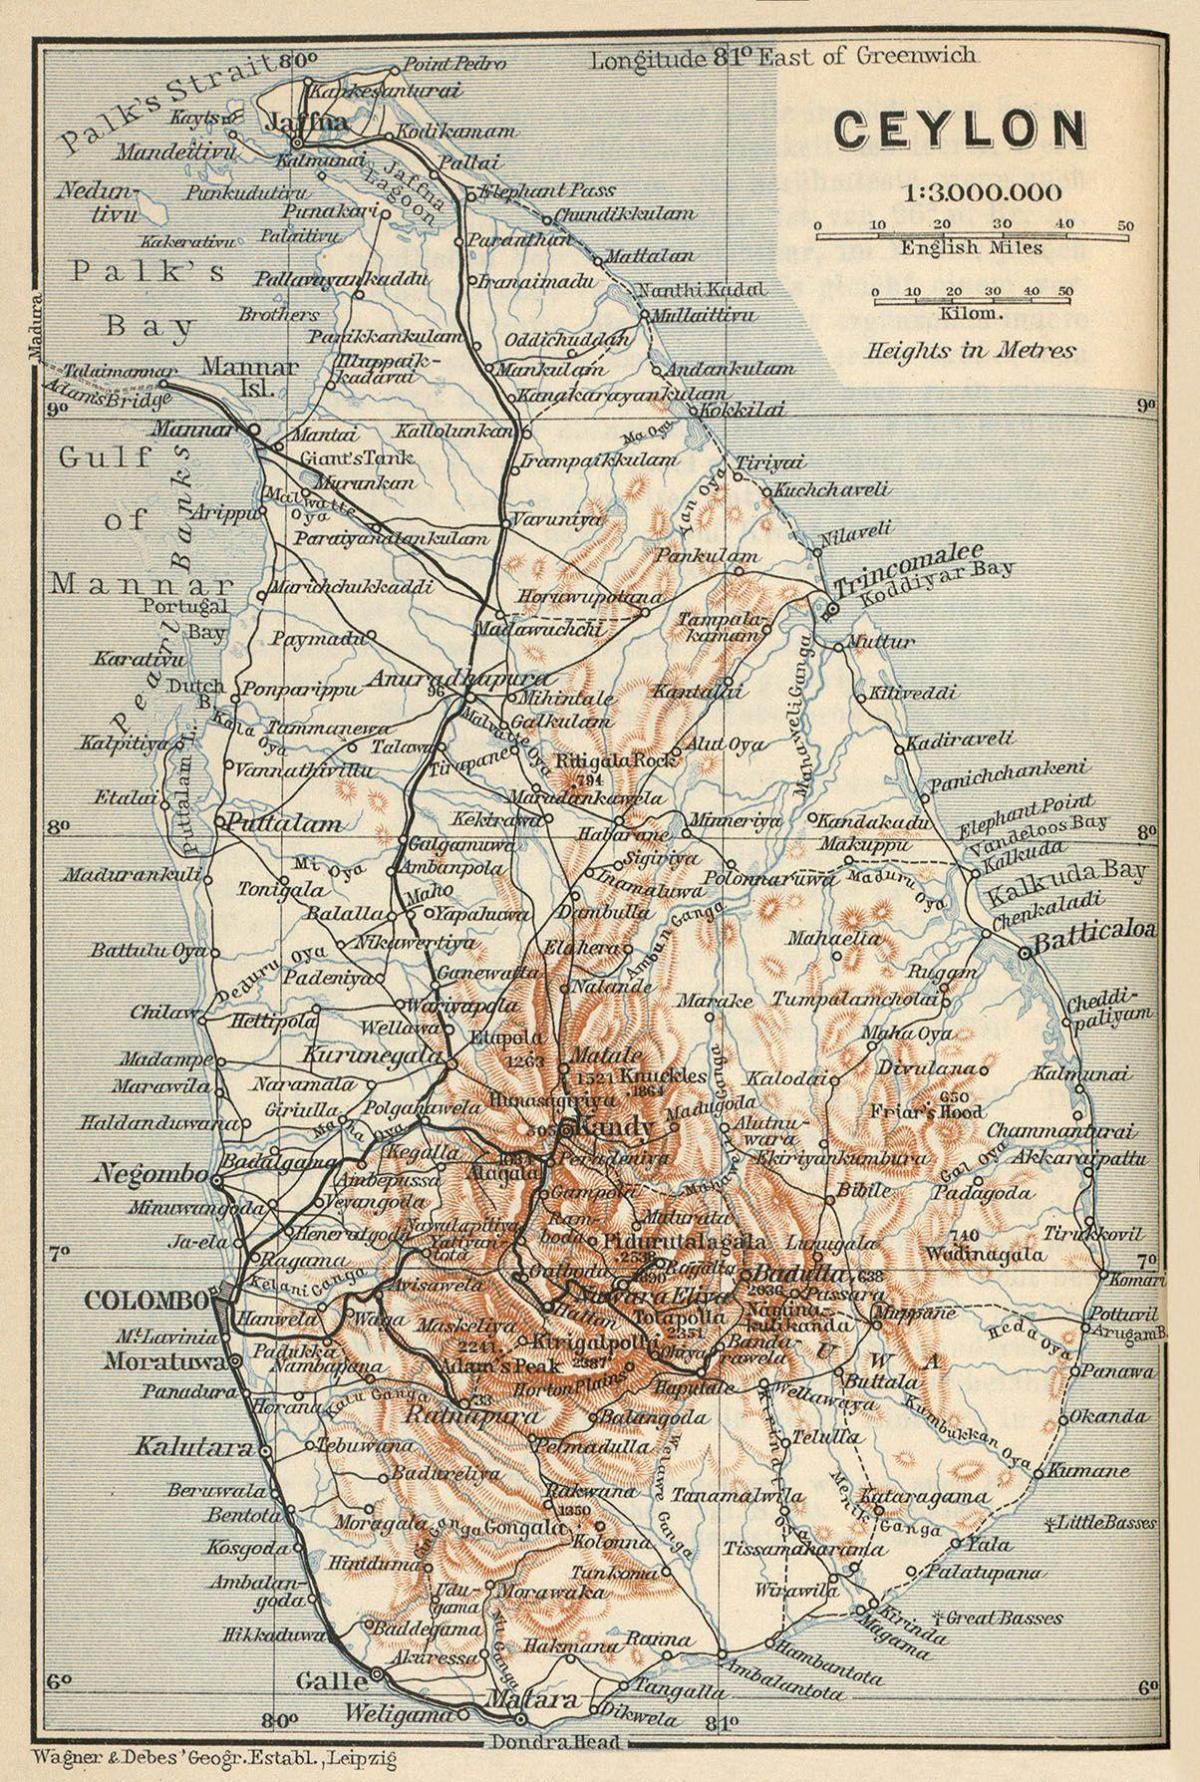 Ceylon di peta